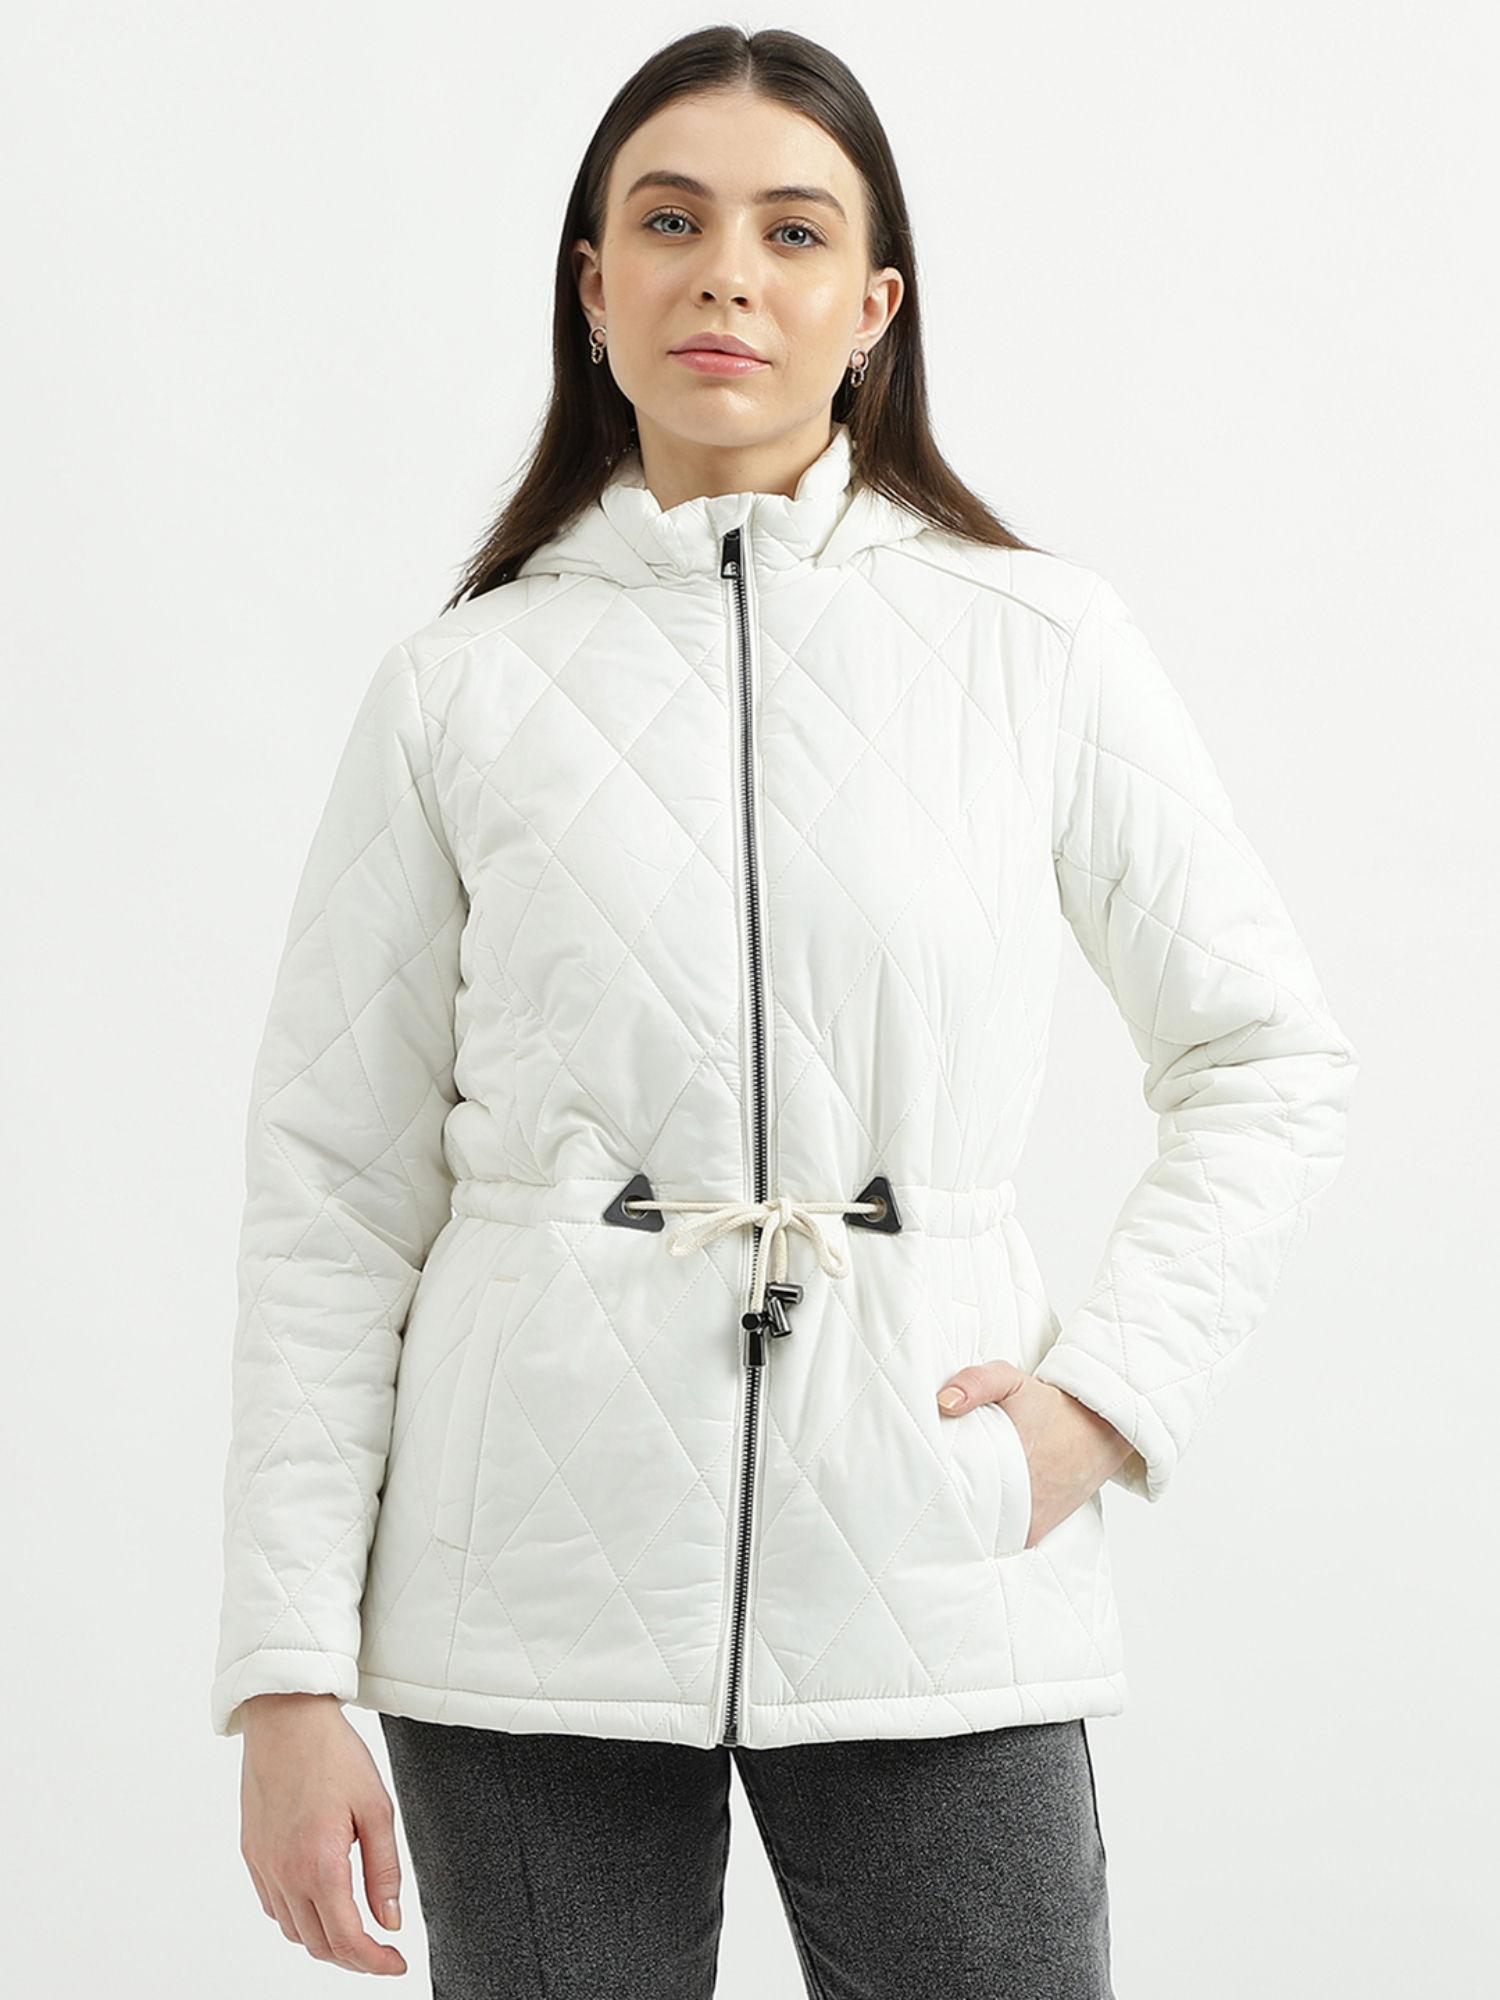 womens long sleeves sherling jacket